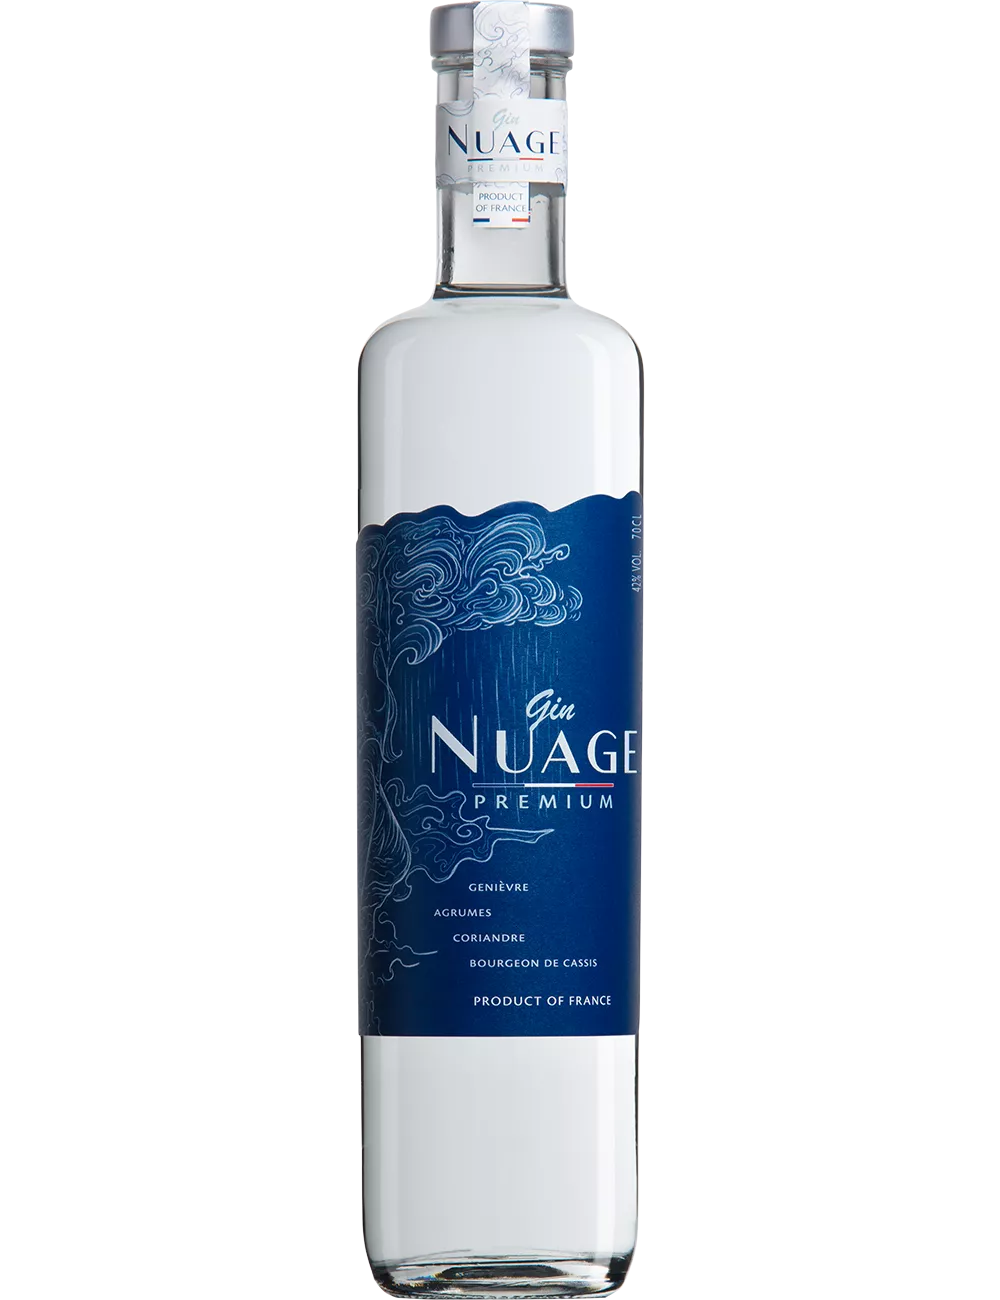 Nuage - Distilled gin